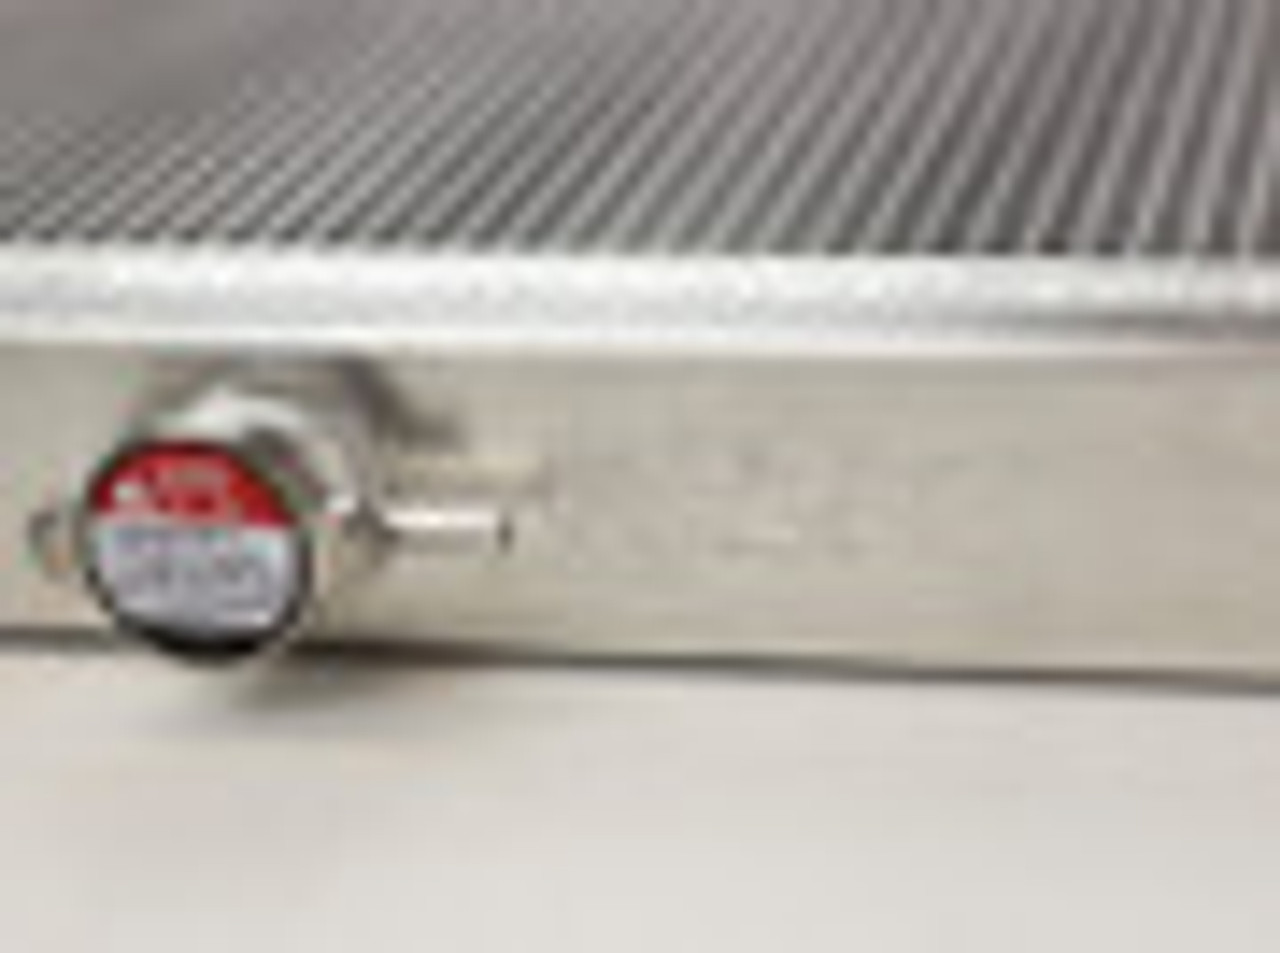 ISR Aluminum Radiator for your Nissan 240sx 95-98 w/KA24. High quality aluminum.
1x Radiator Cap